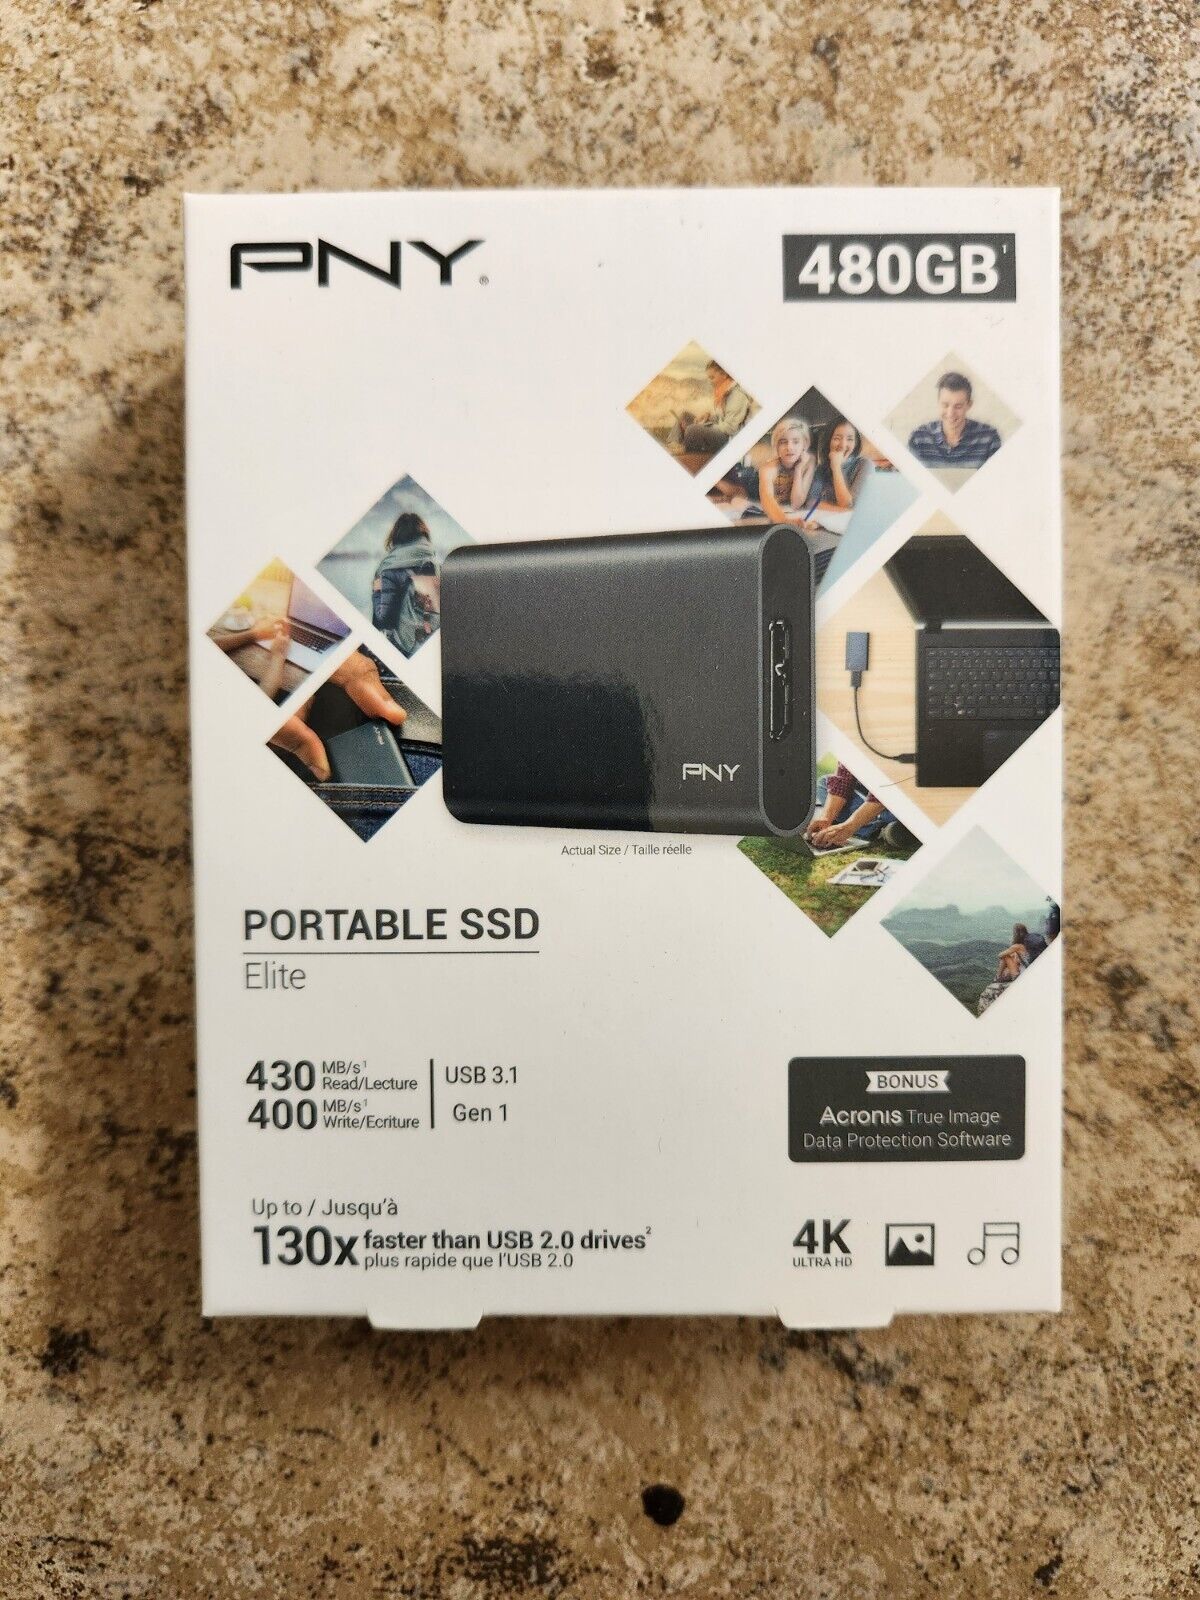 Brand New PNY PORTABLE SSD ELITE 480GB USB 3.1